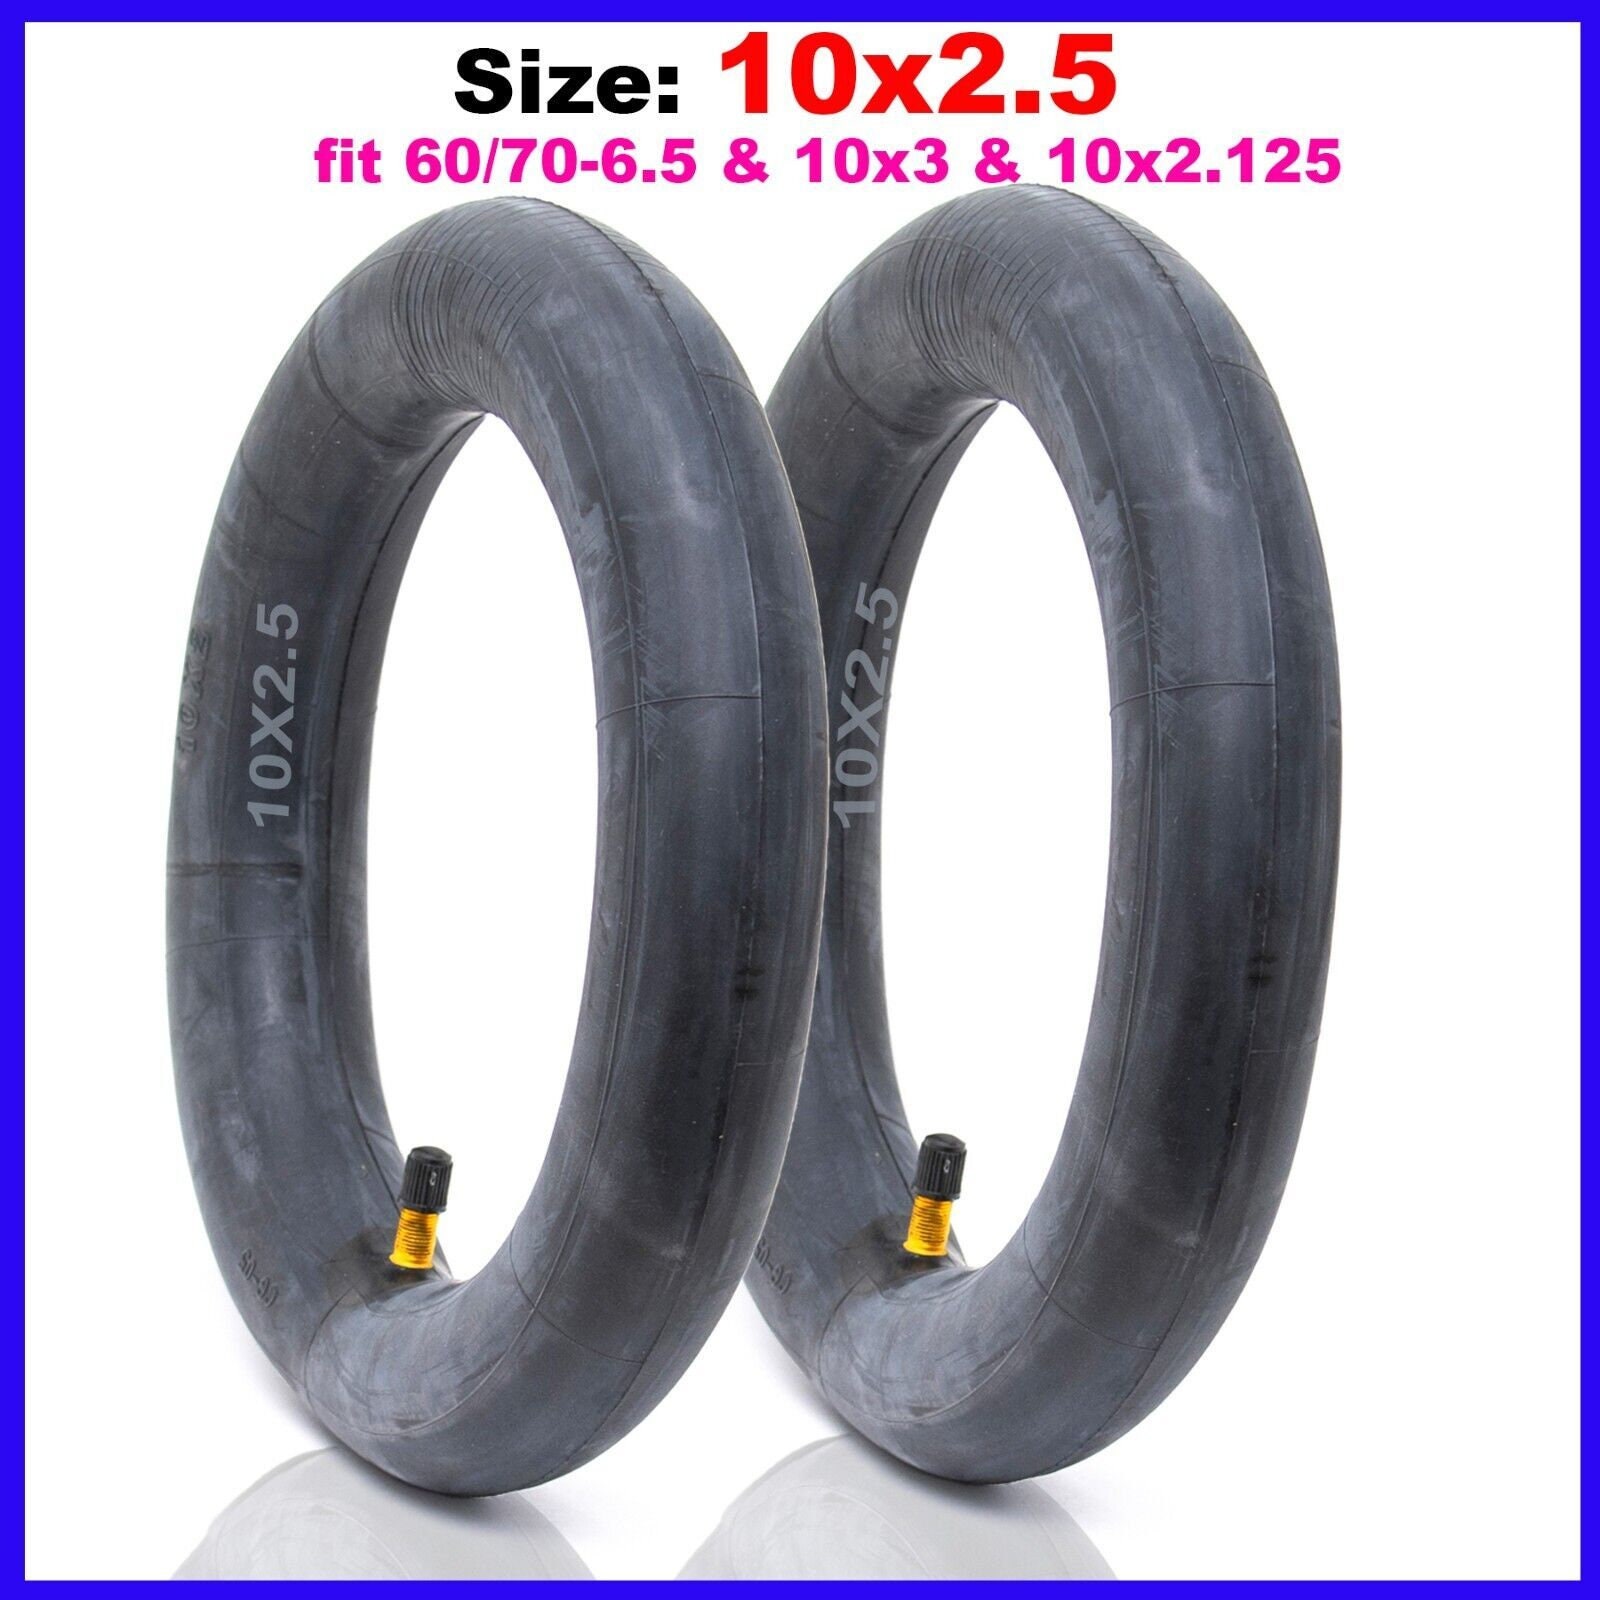 Solid Tire 10x2.70-6.5 & 70/65-6.5 fit H5 Joyor 8 Hiboy Emove